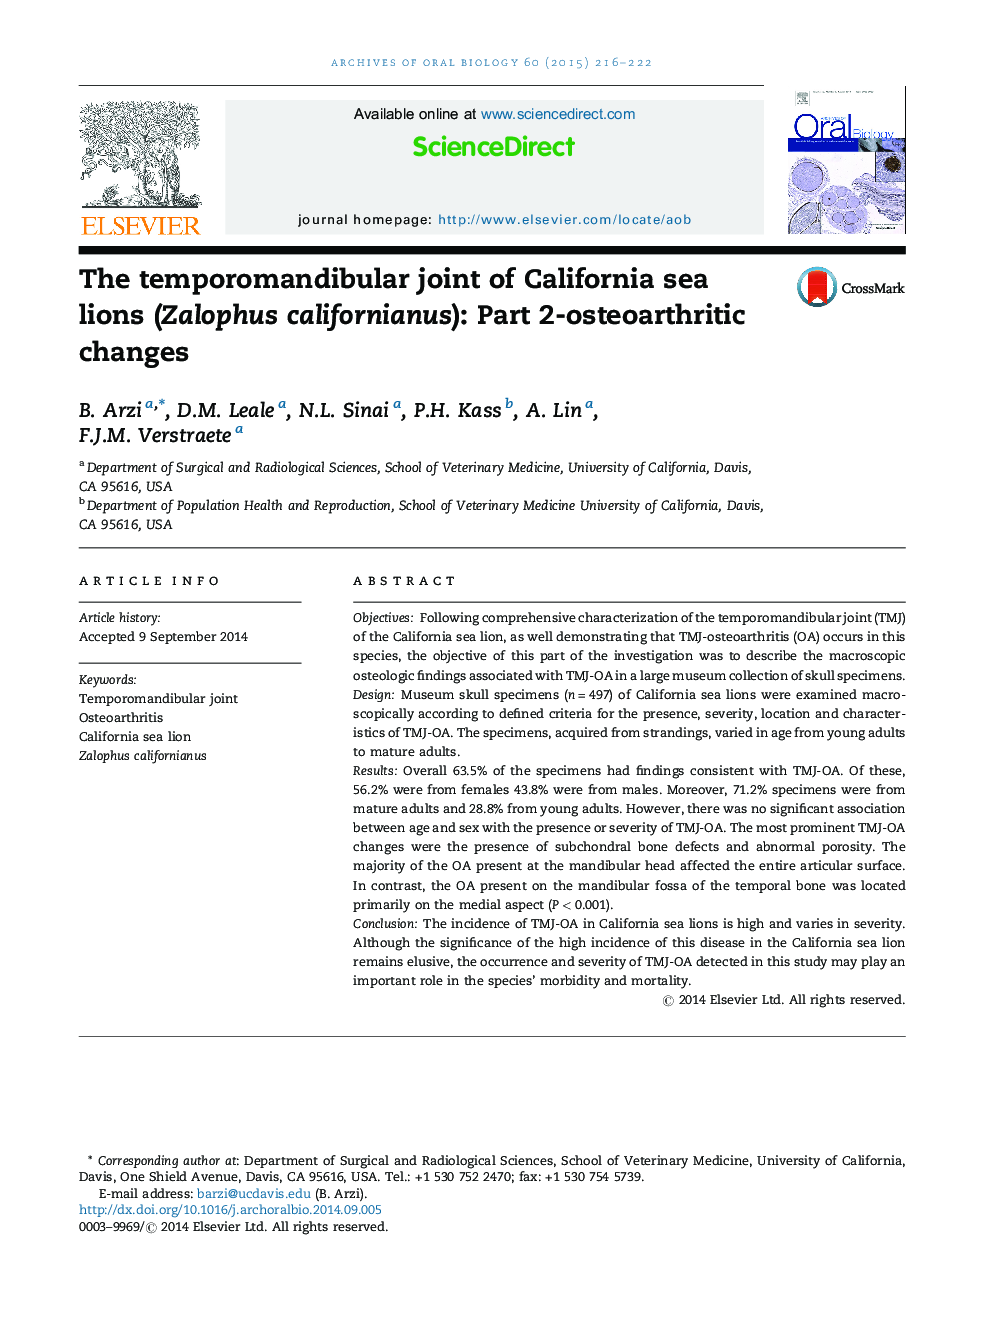 The temporomandibular joint of California sea lions (Zalophus californianus): Part 2-osteoarthritic changes